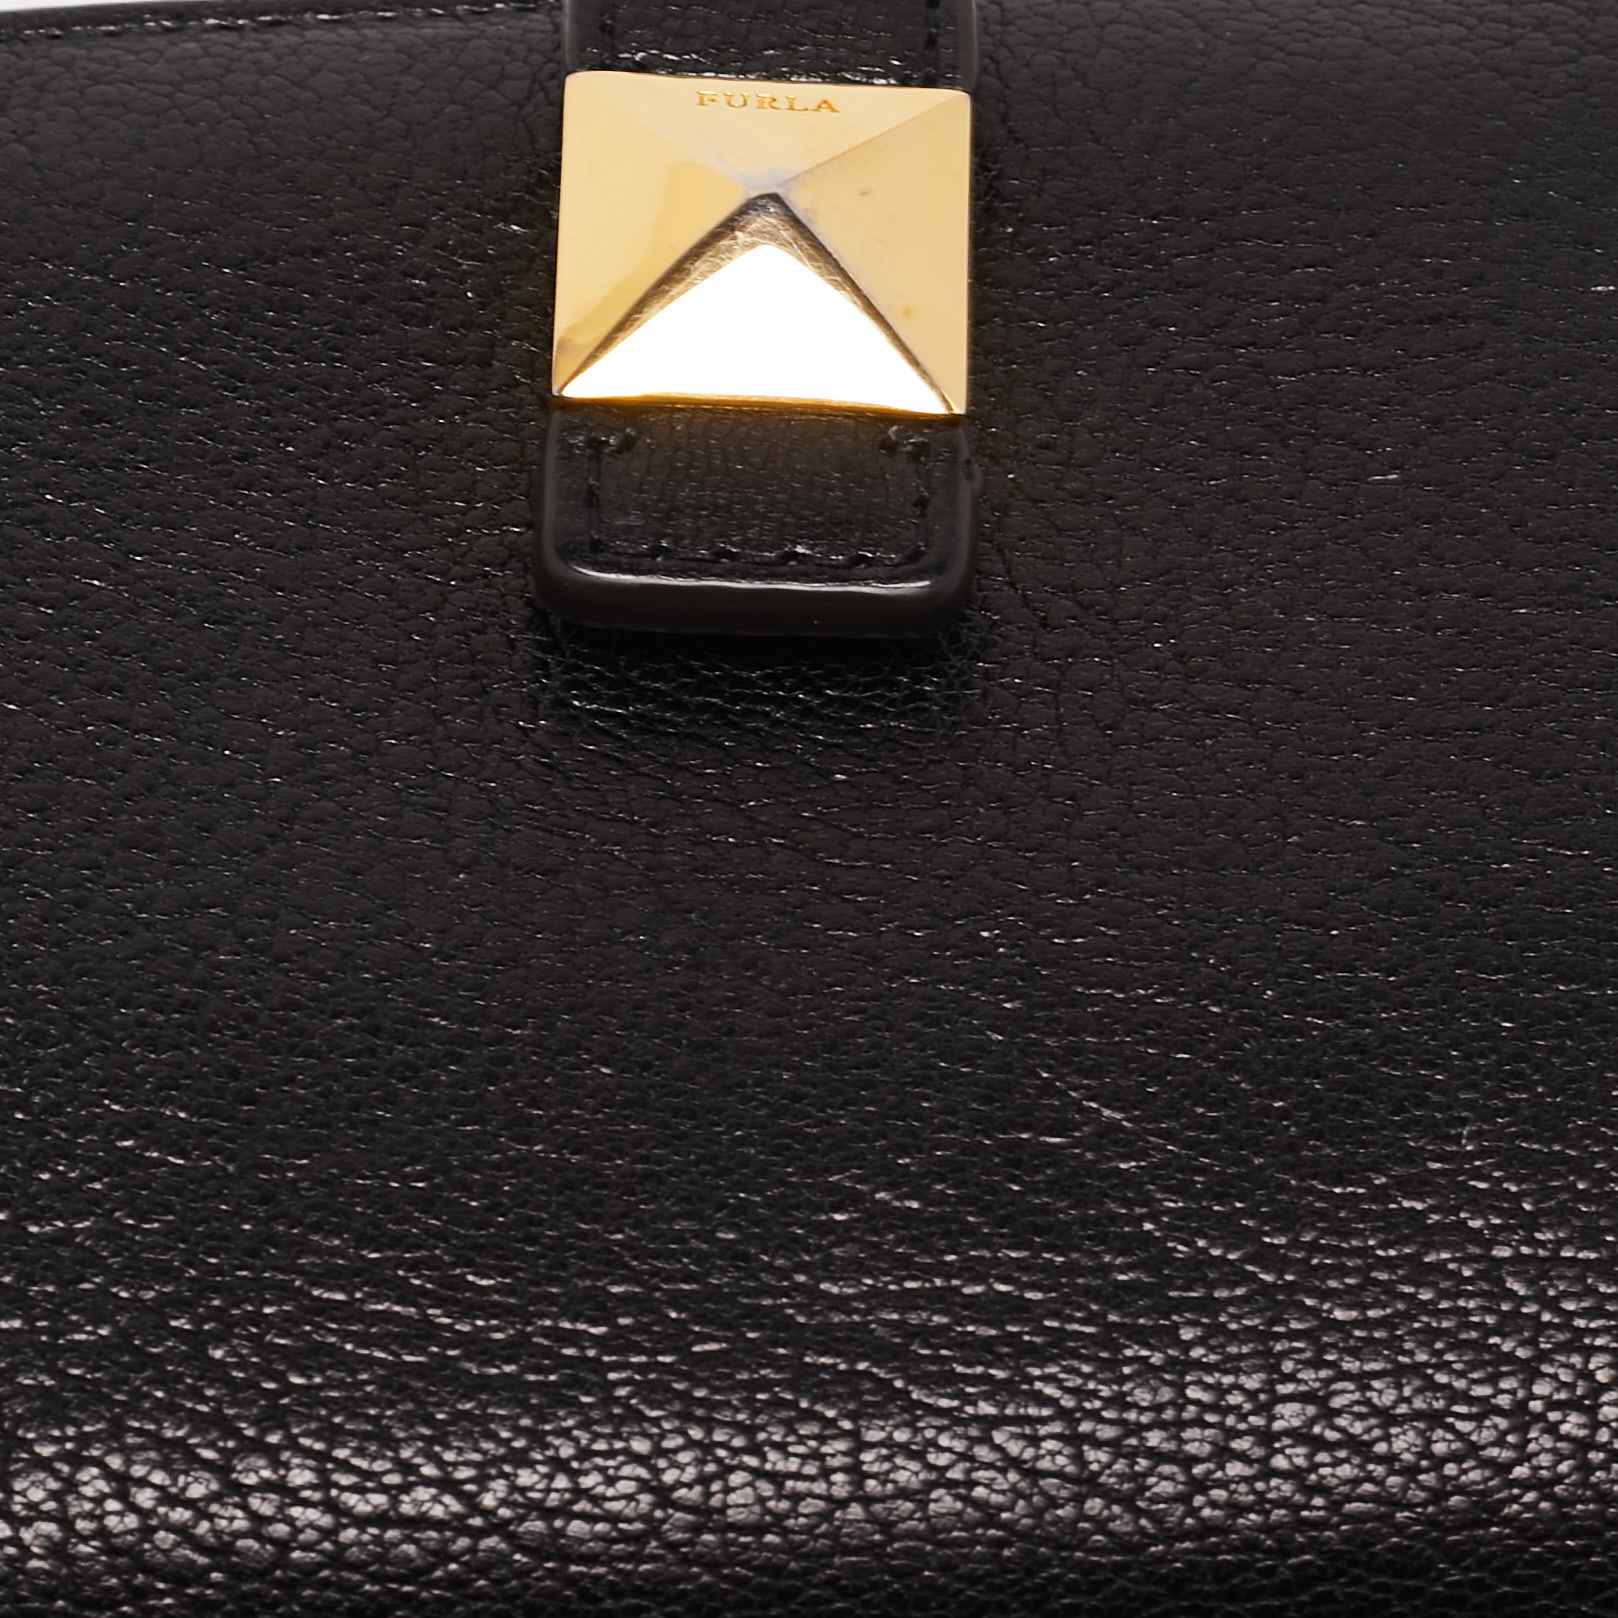 Furla Black Leather Stud Flap Compact Wallet